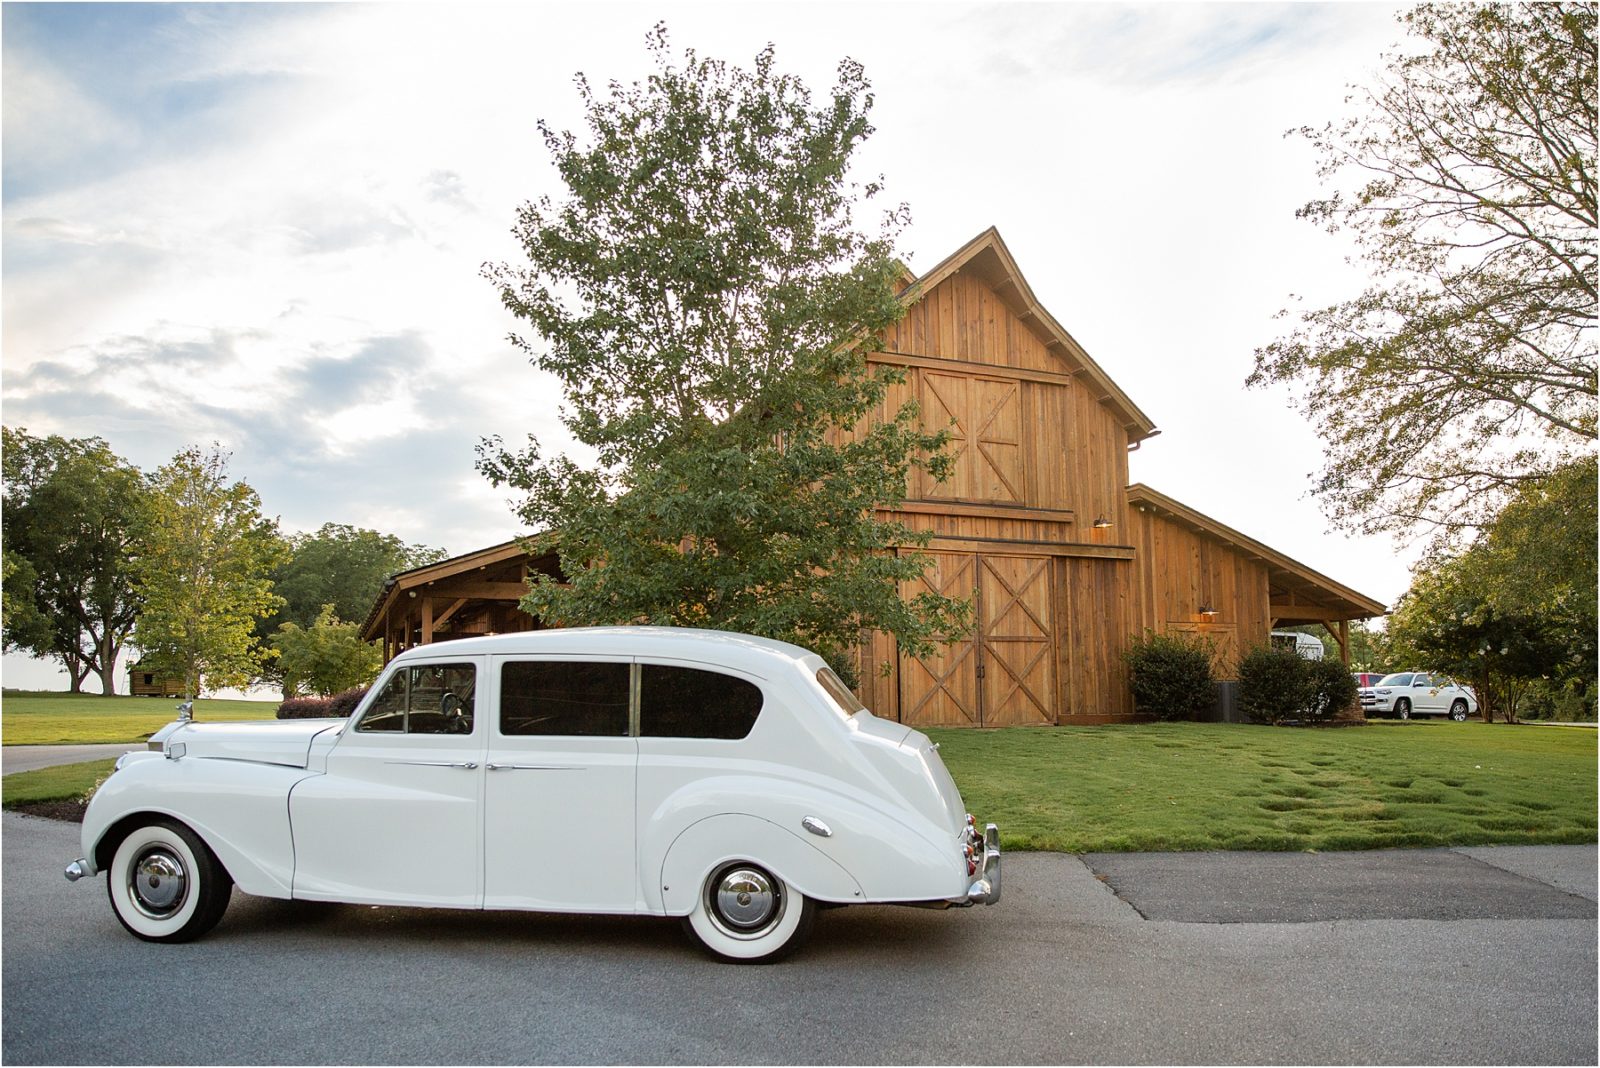 White Rolls Royce in front of barn wedding venue